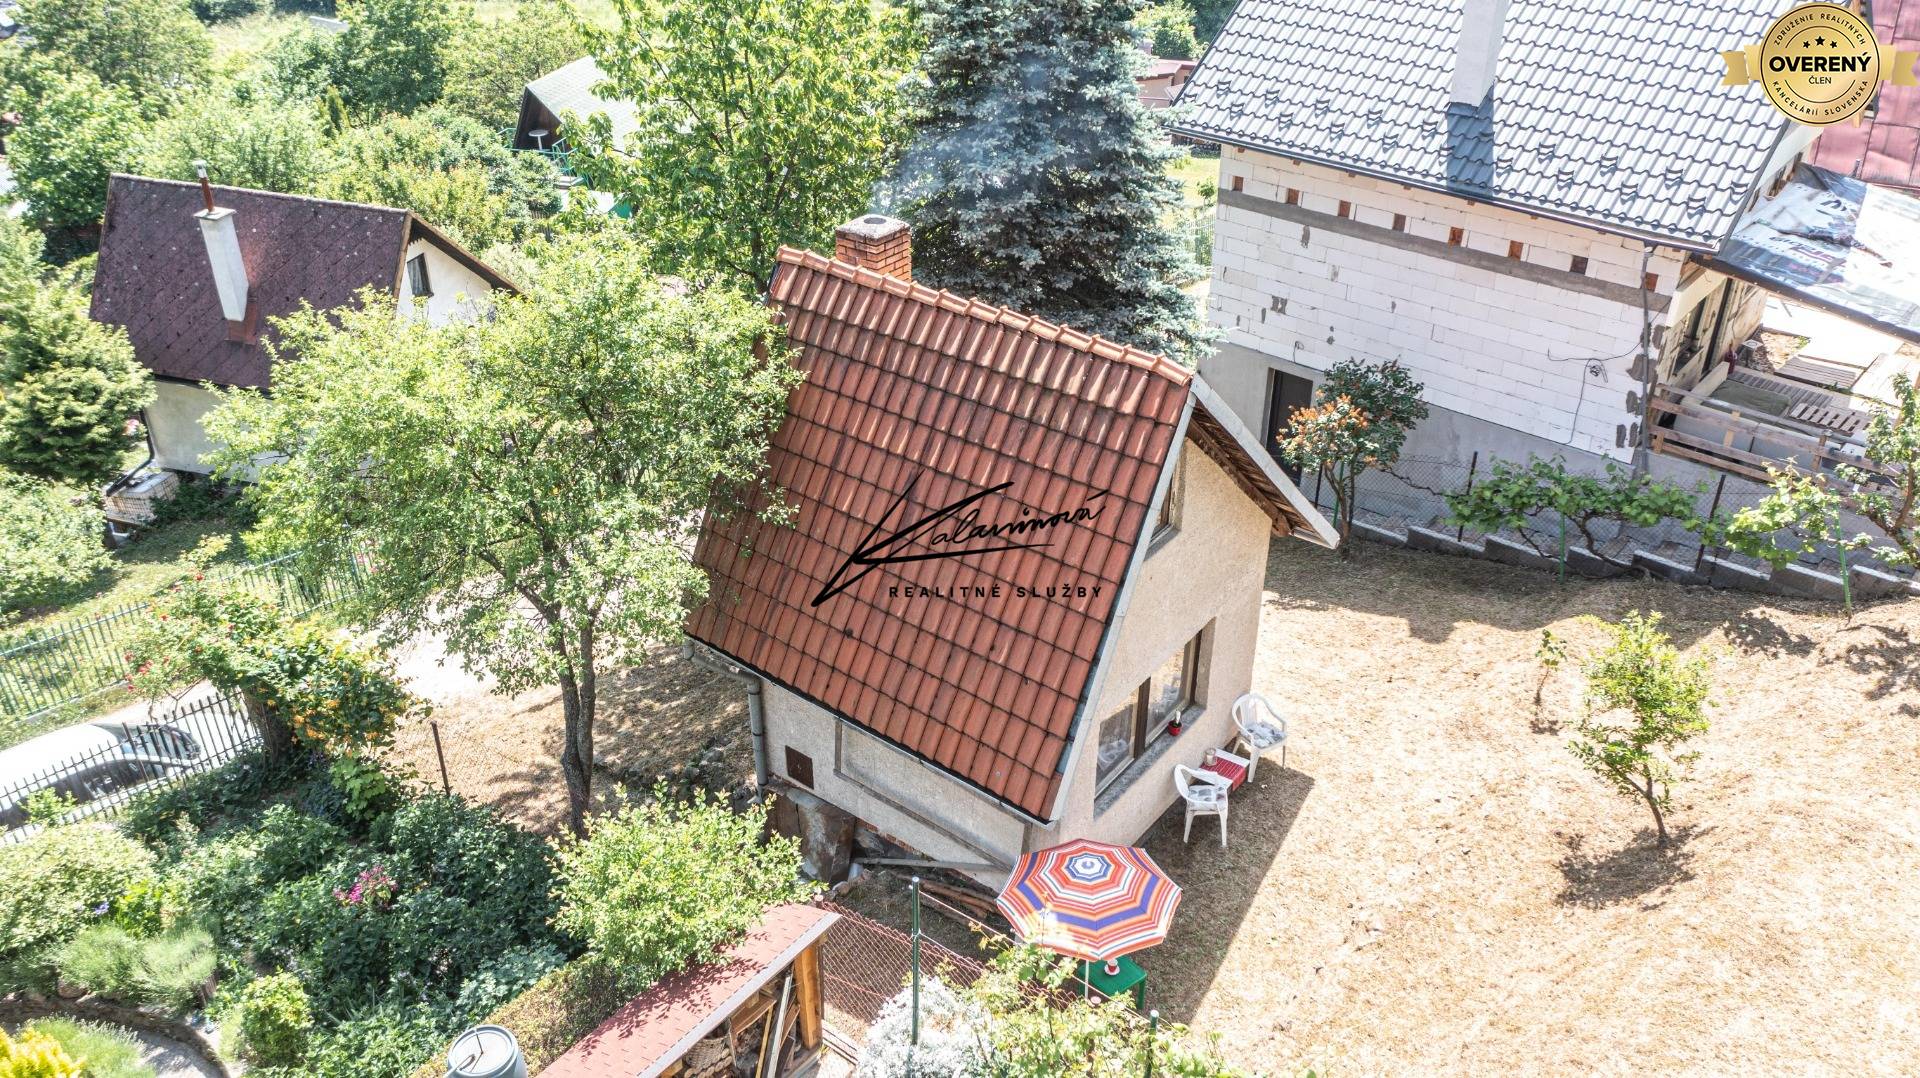 Sale Cottage, Košice-okolie, Slovakia